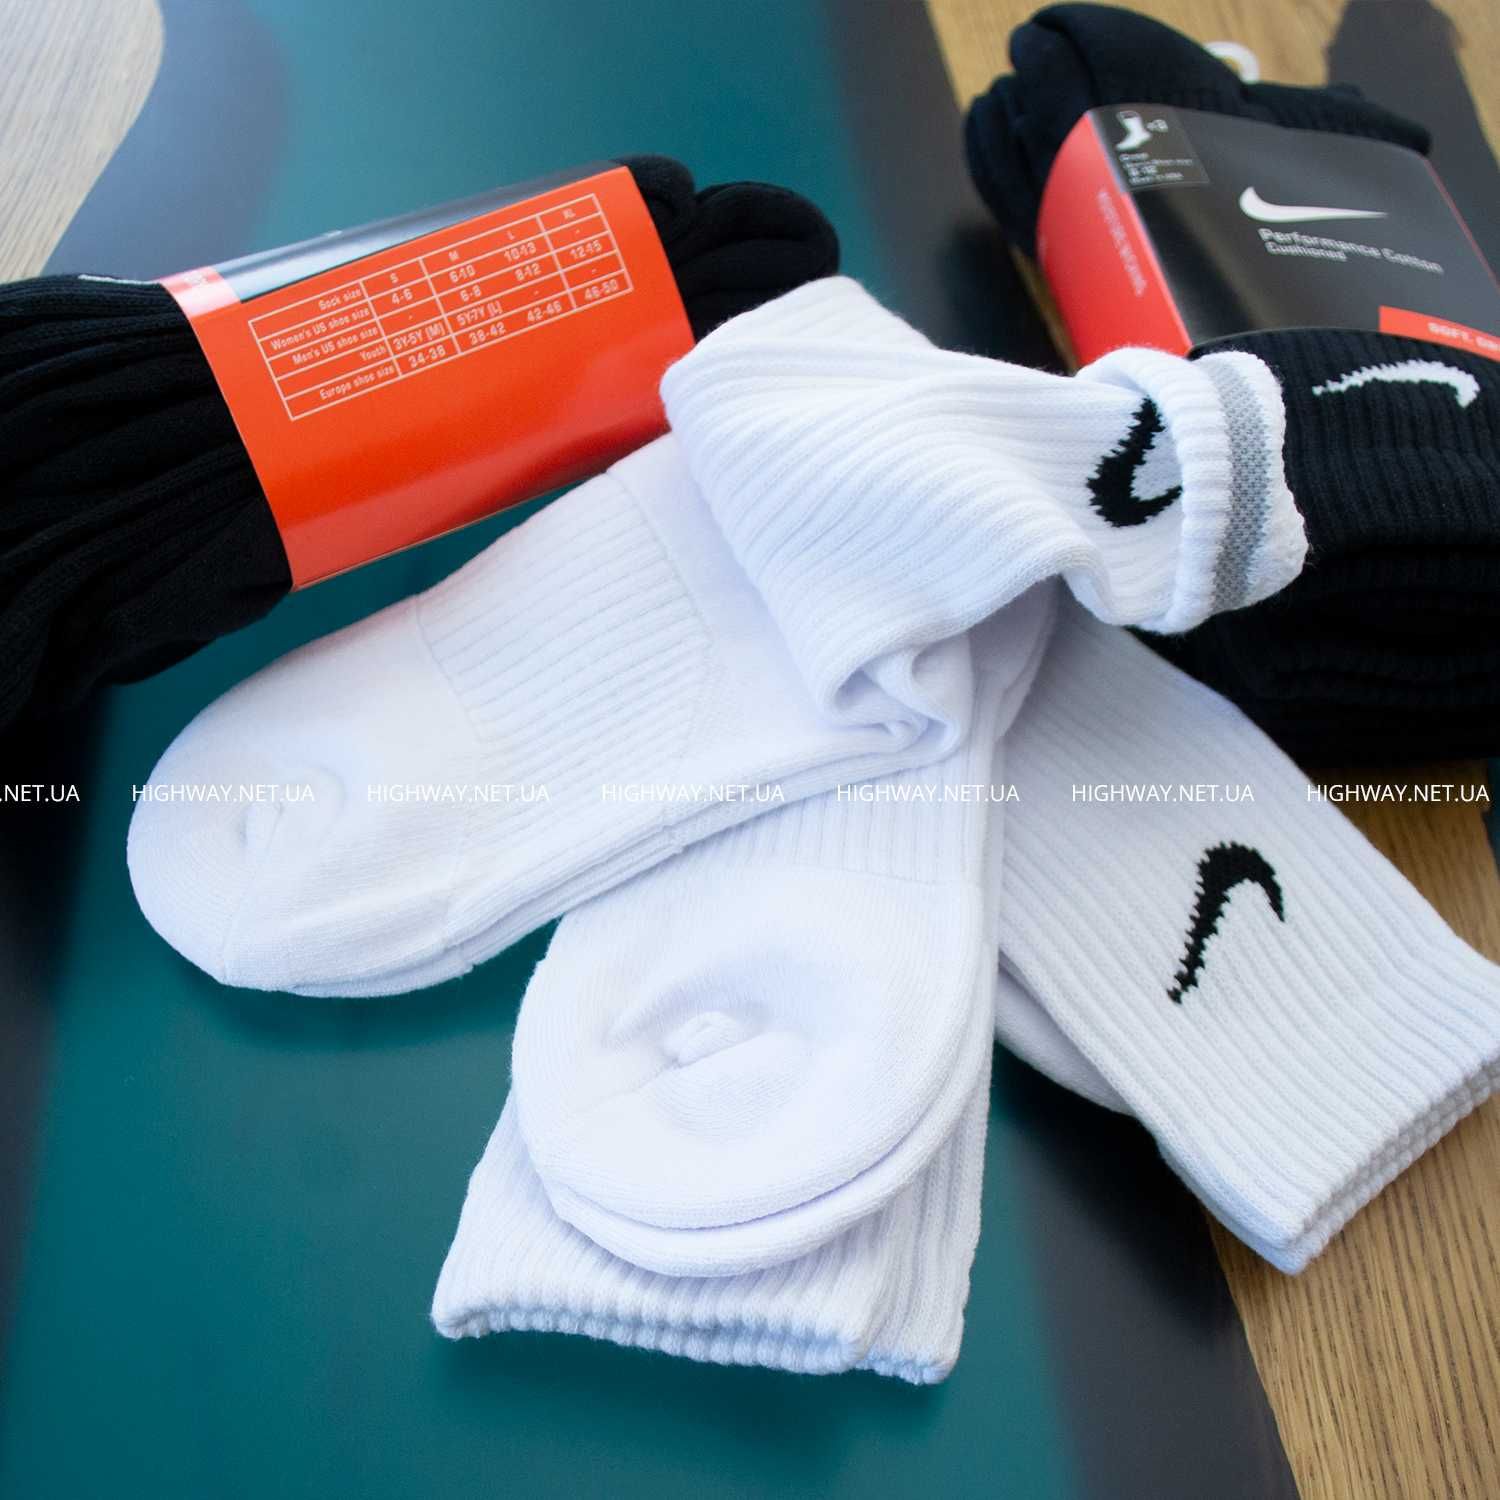 【 HighWay 】 Высокие носки Nike Performance sx4700-101 шкарпетки dri-fi